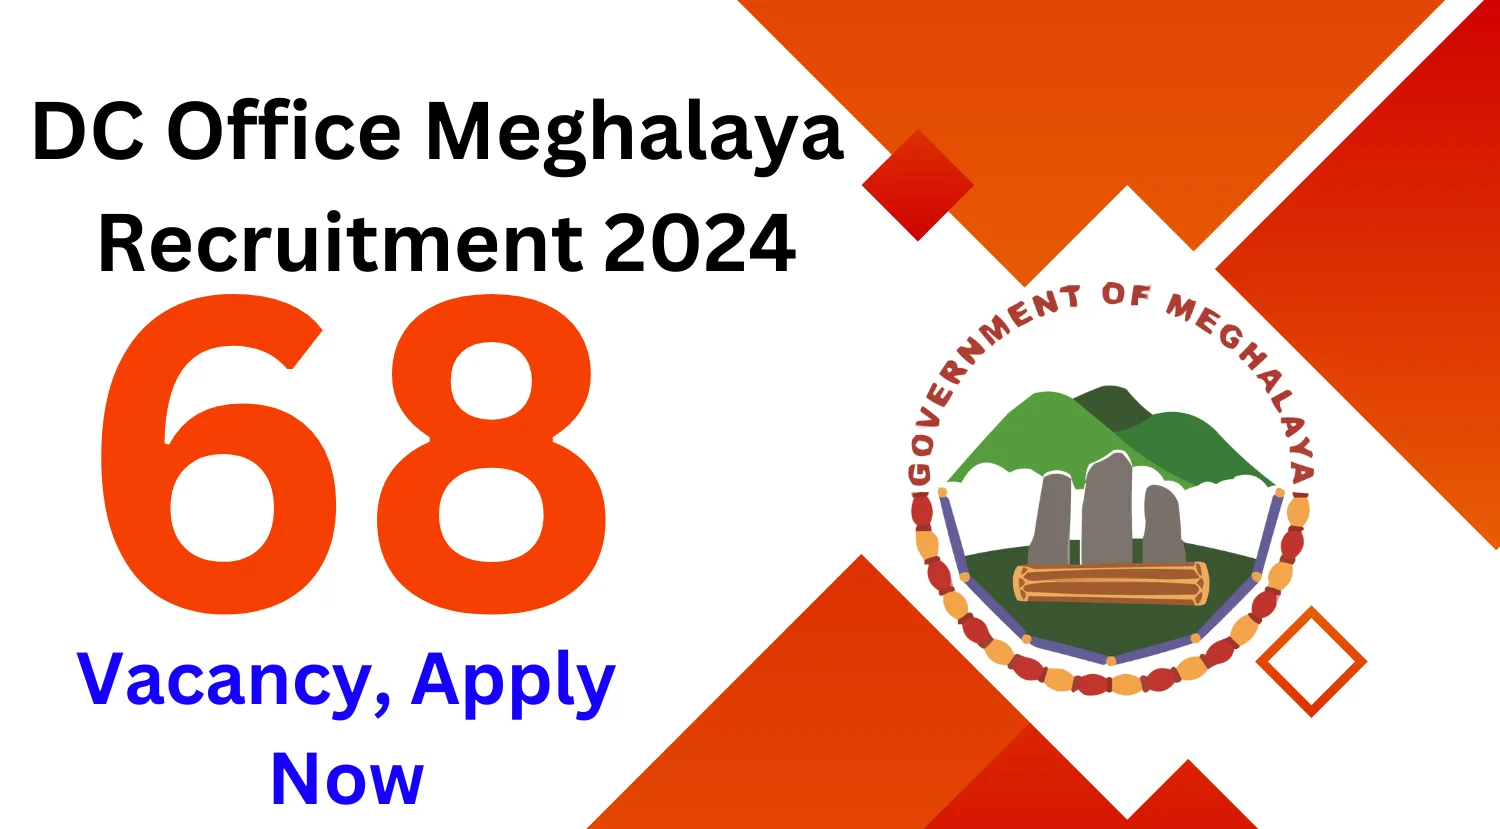 DC Office Meghalaya Recruitment 2024